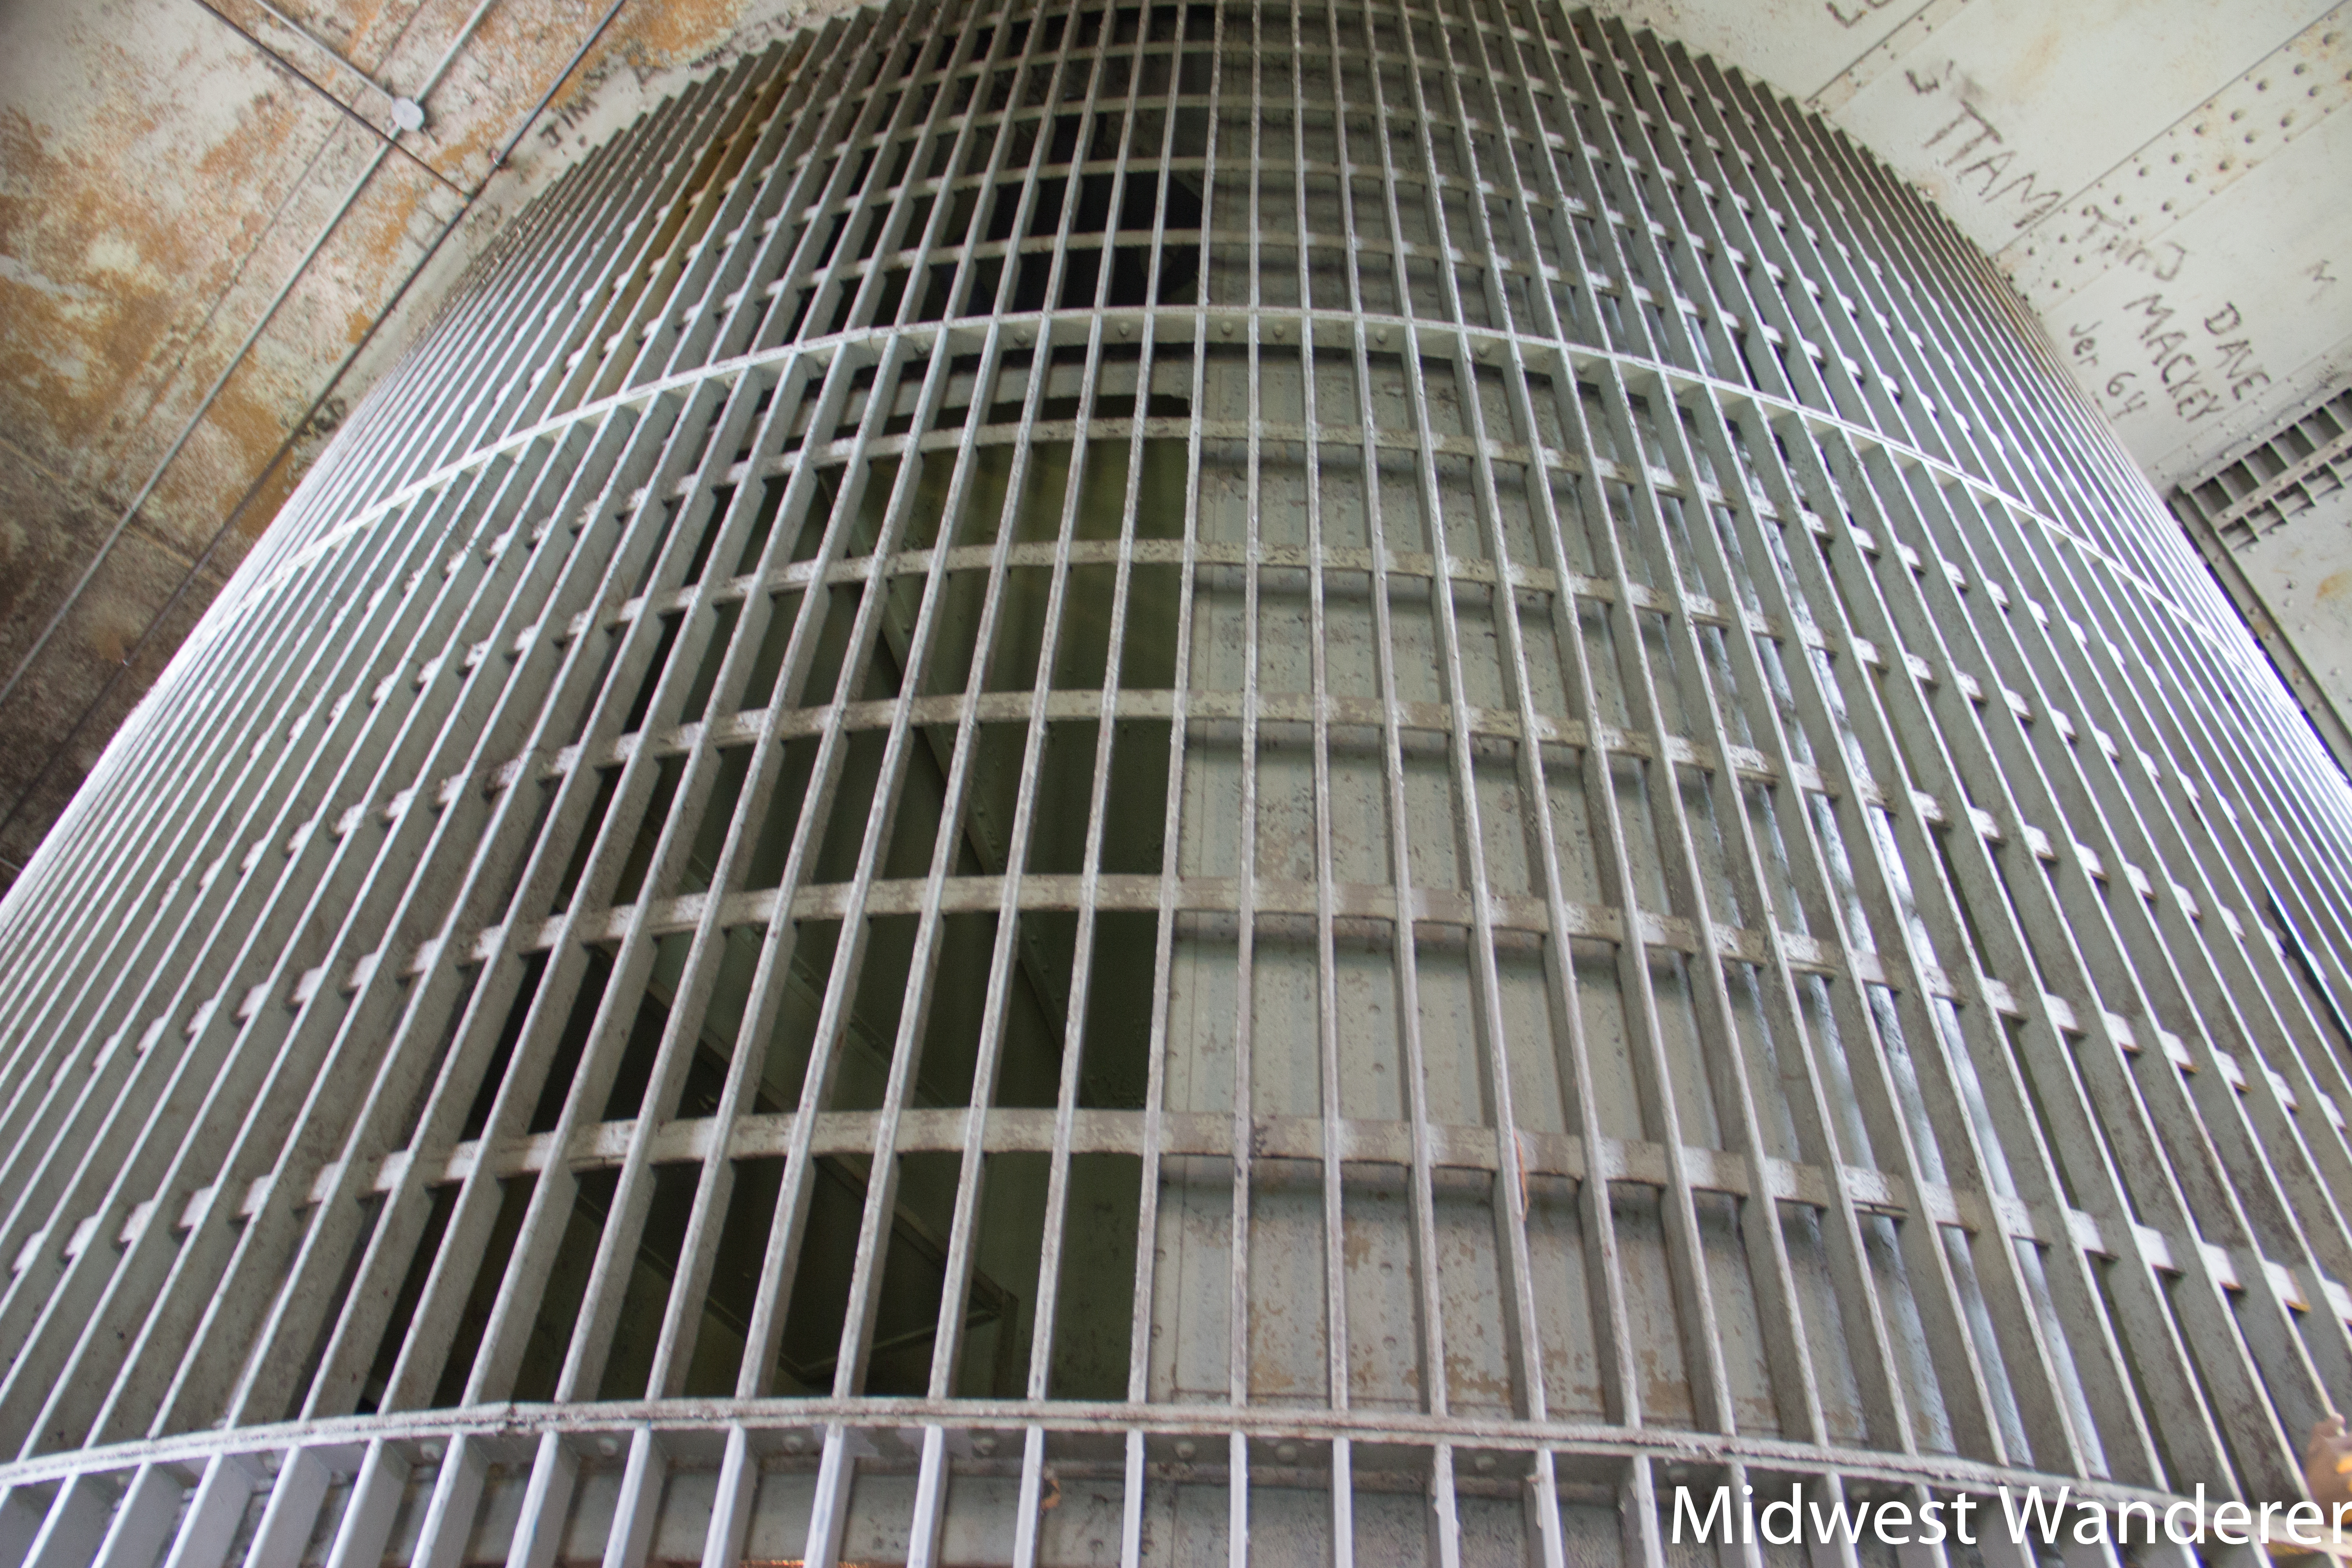 Squirrel Cage Jail